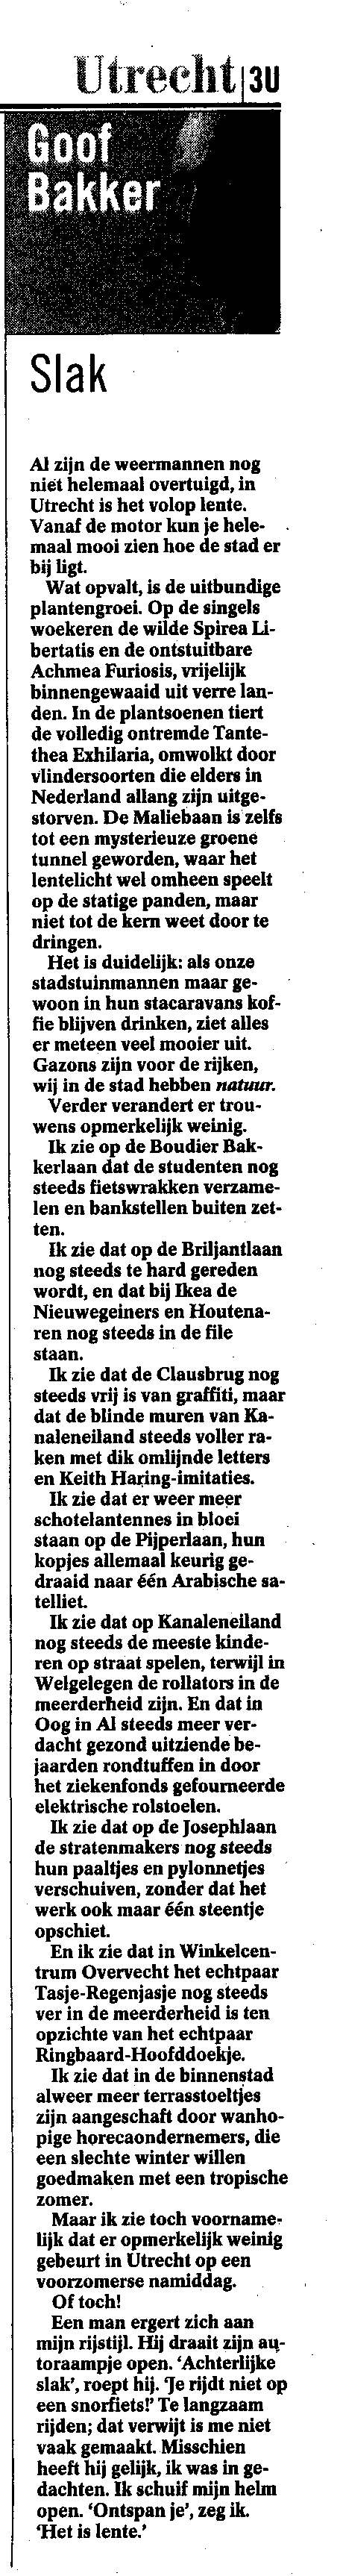 Volkskrant_2004-05-08-Slak